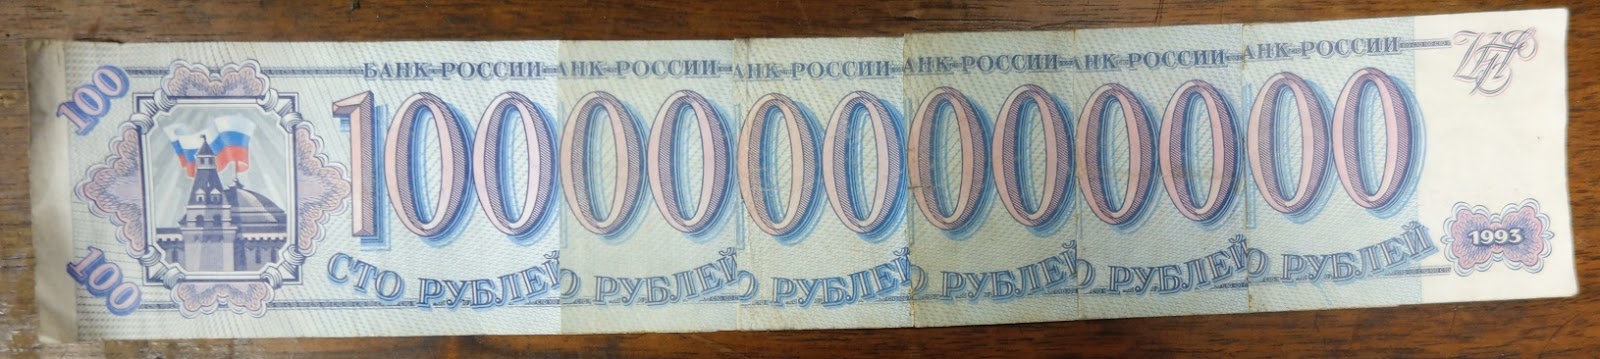 Купюра триллион рублей. Купюра 1000000 рублей. Бумажка 1000000 рублей. Миллион рублей одной бумажкой. Миллион рублей одной купюрой.